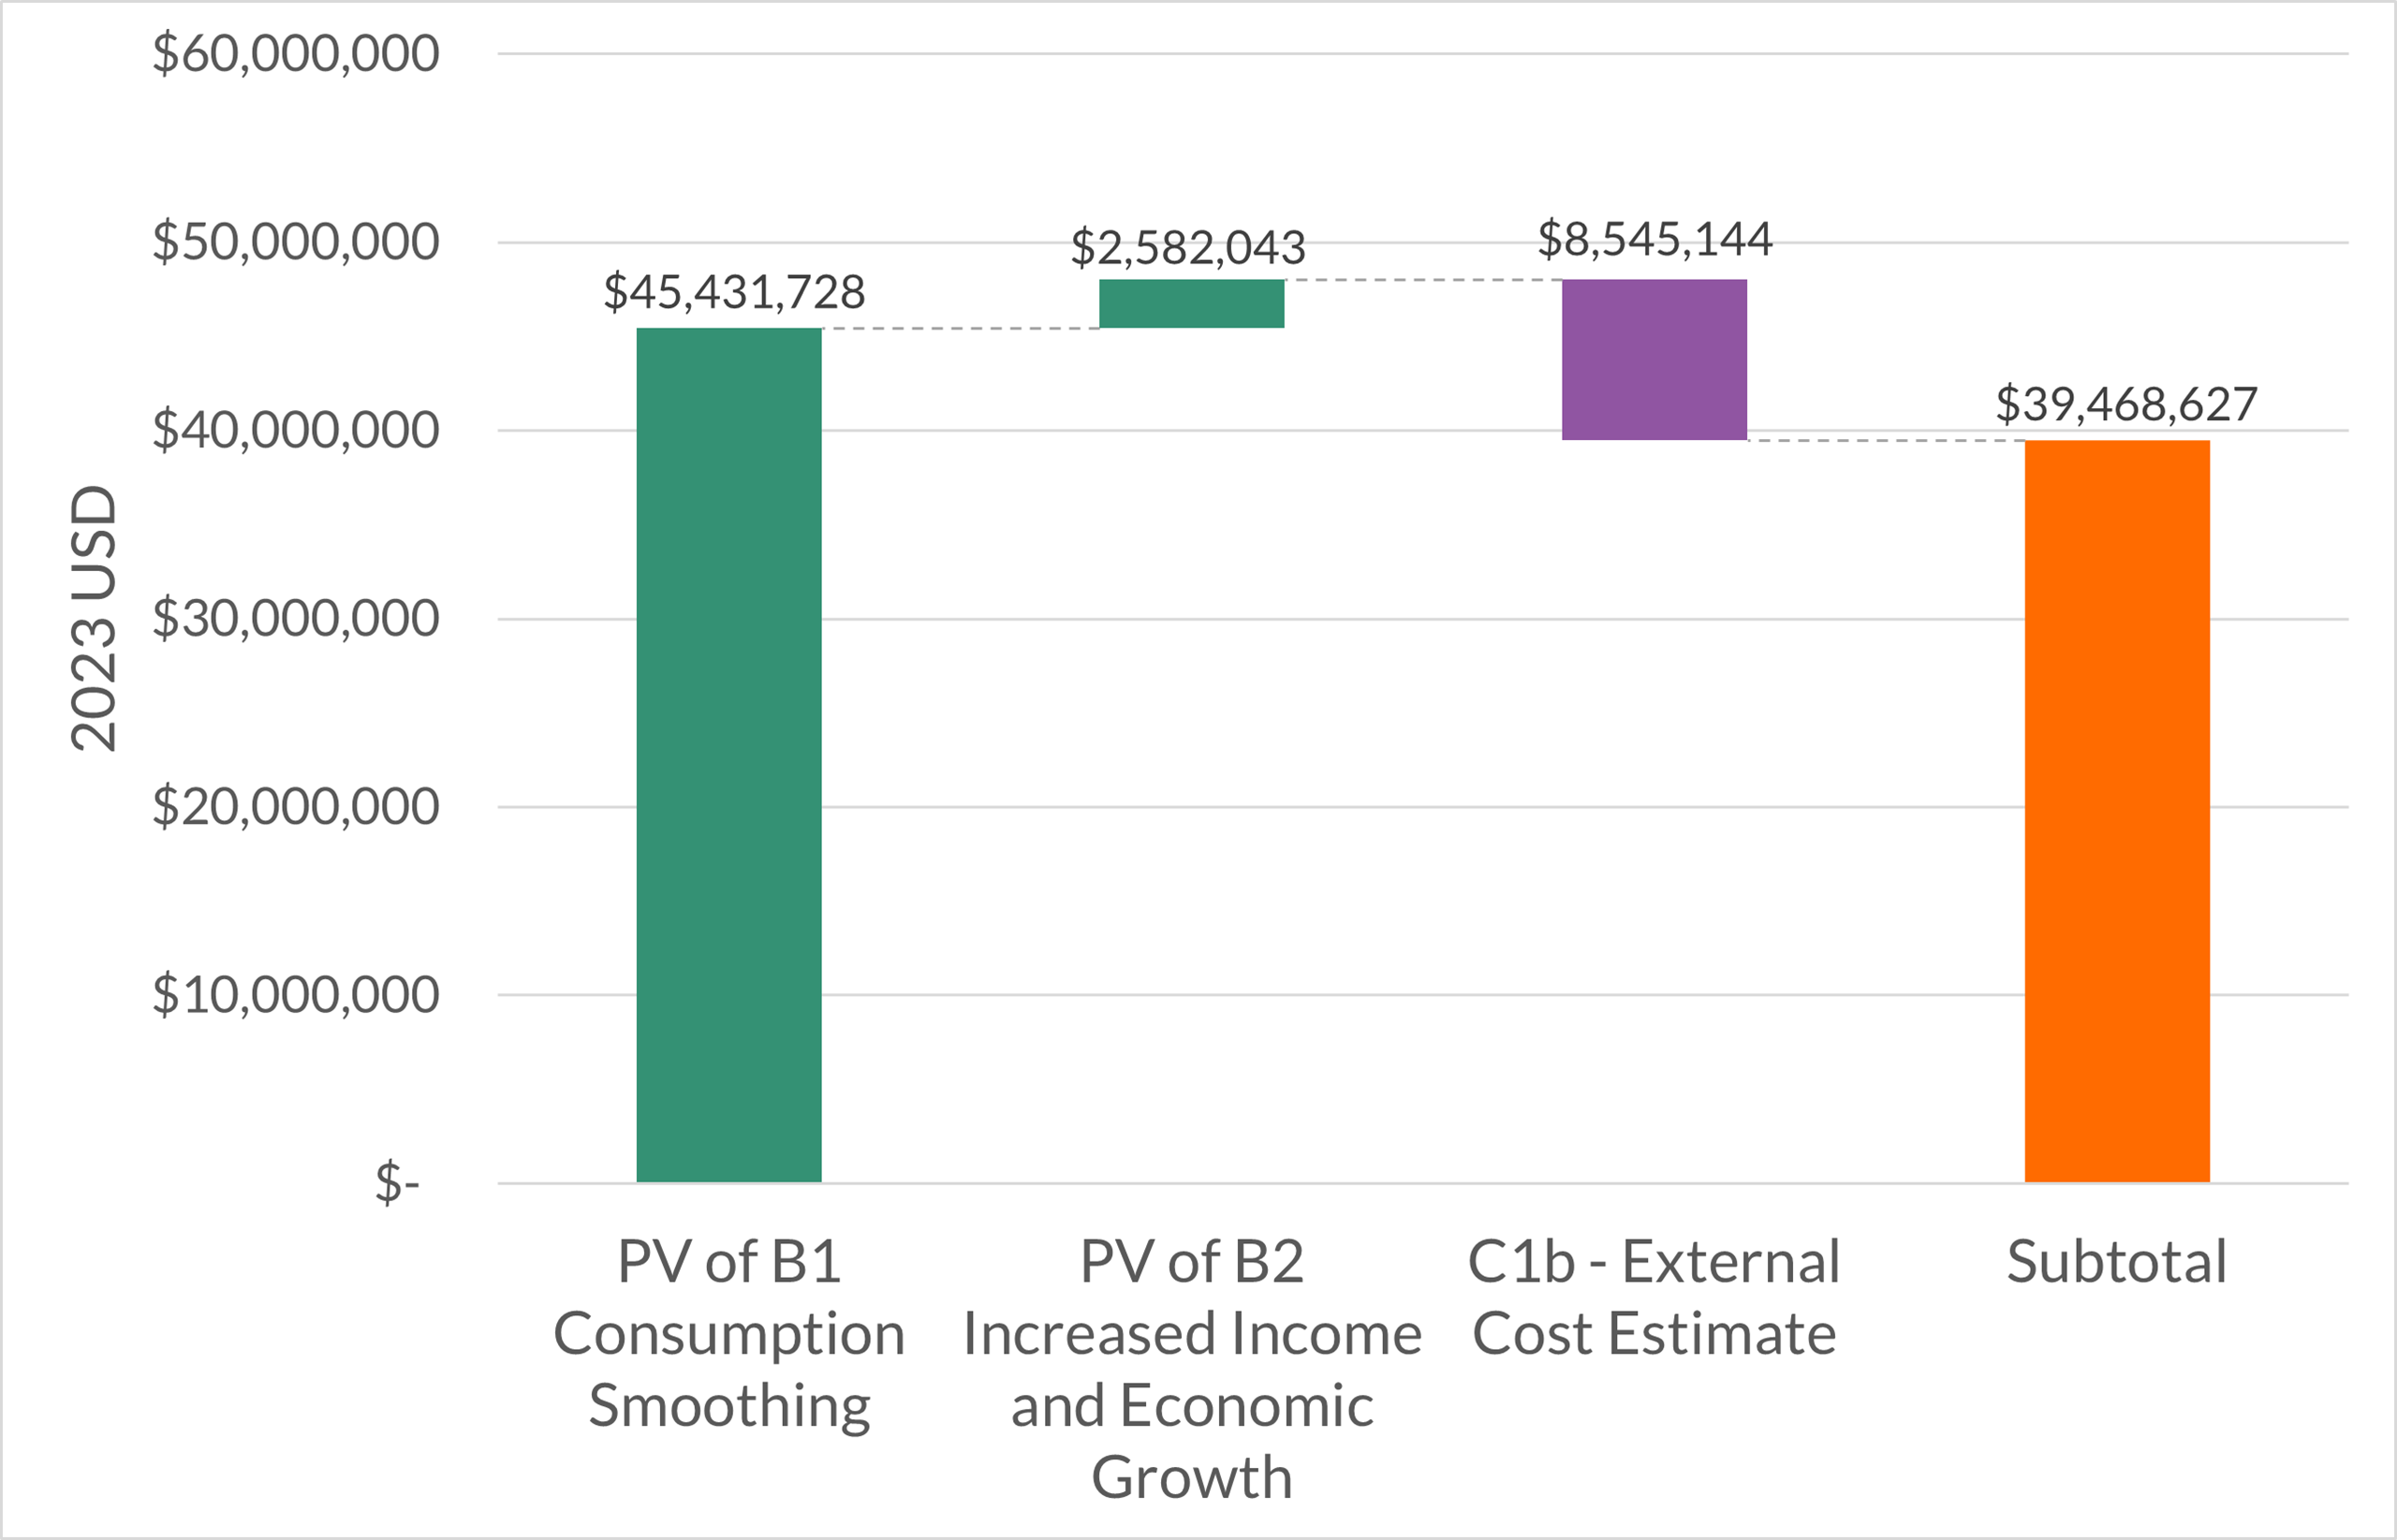 Figure 1: Breakdown of NPV (External Cost Estimate)